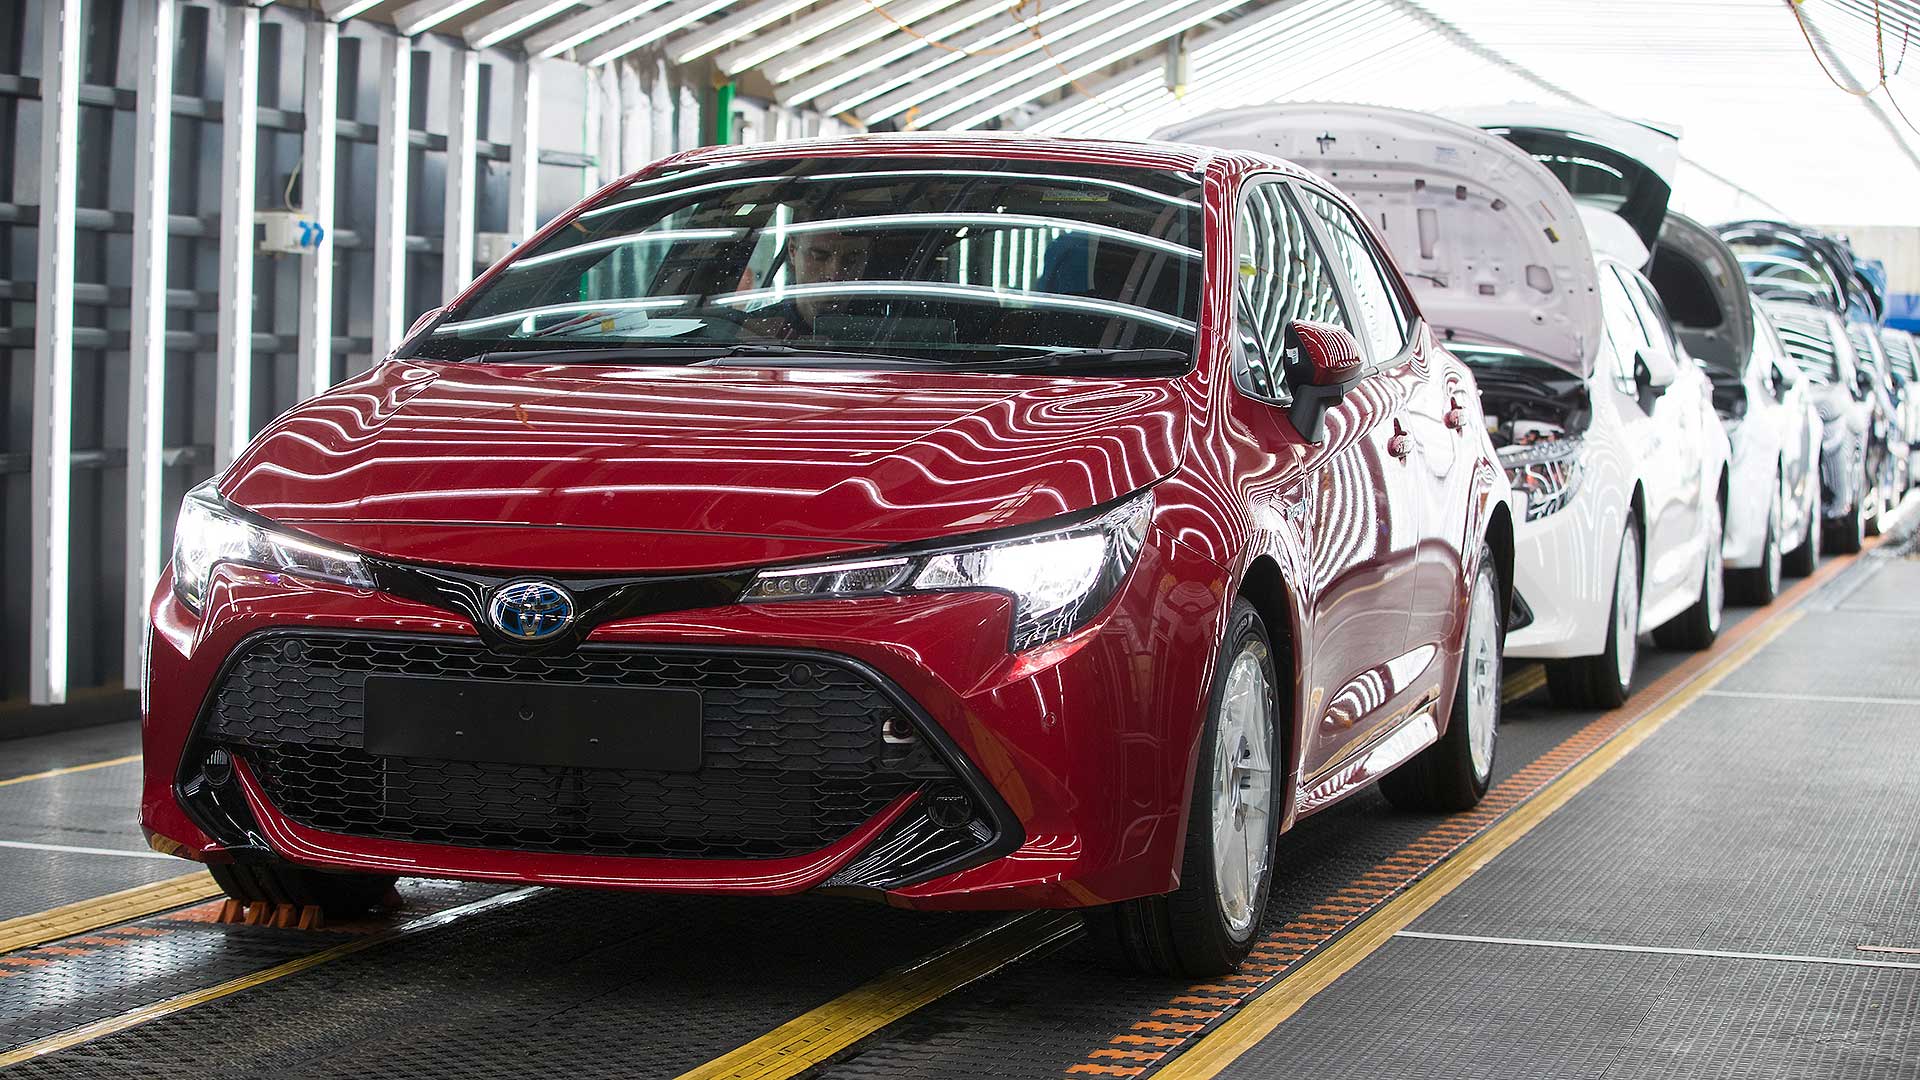 Toyota Corolla production in Burnaston